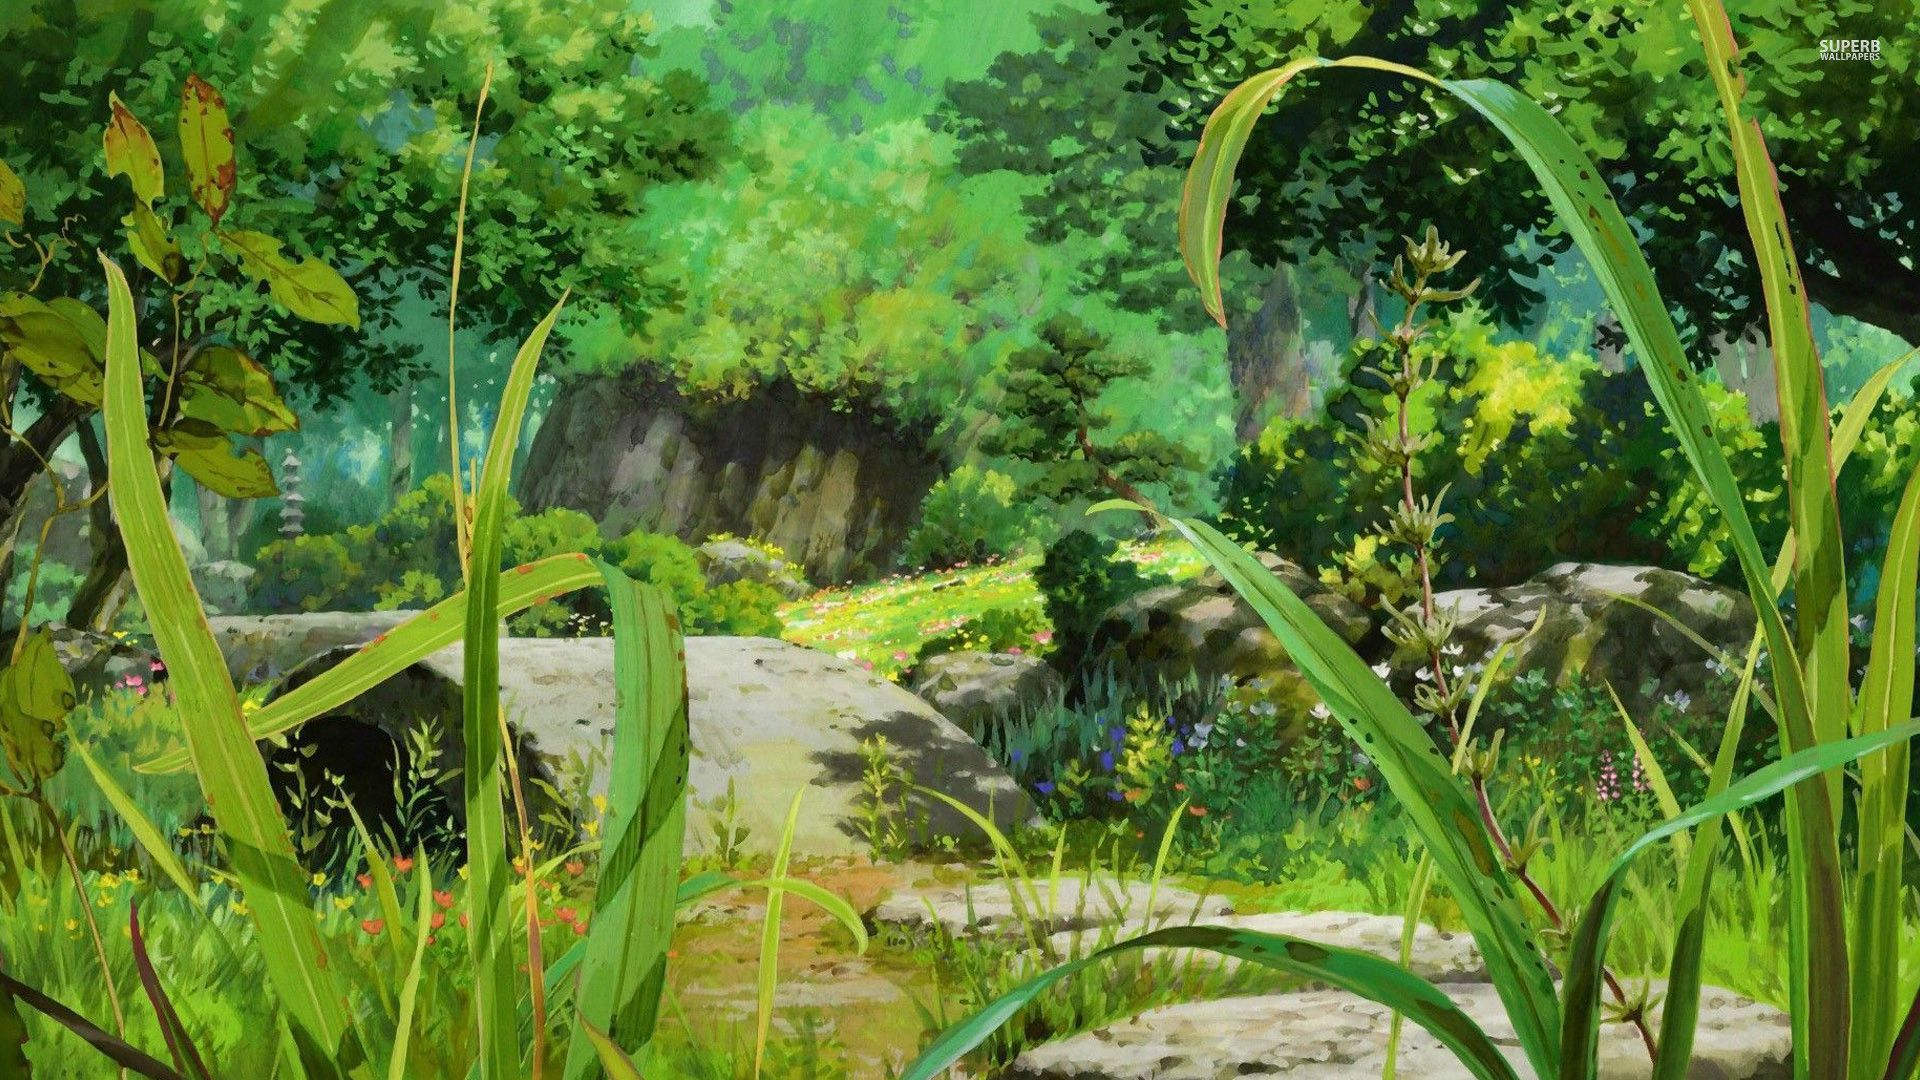 Pokémon Anime Forest Background